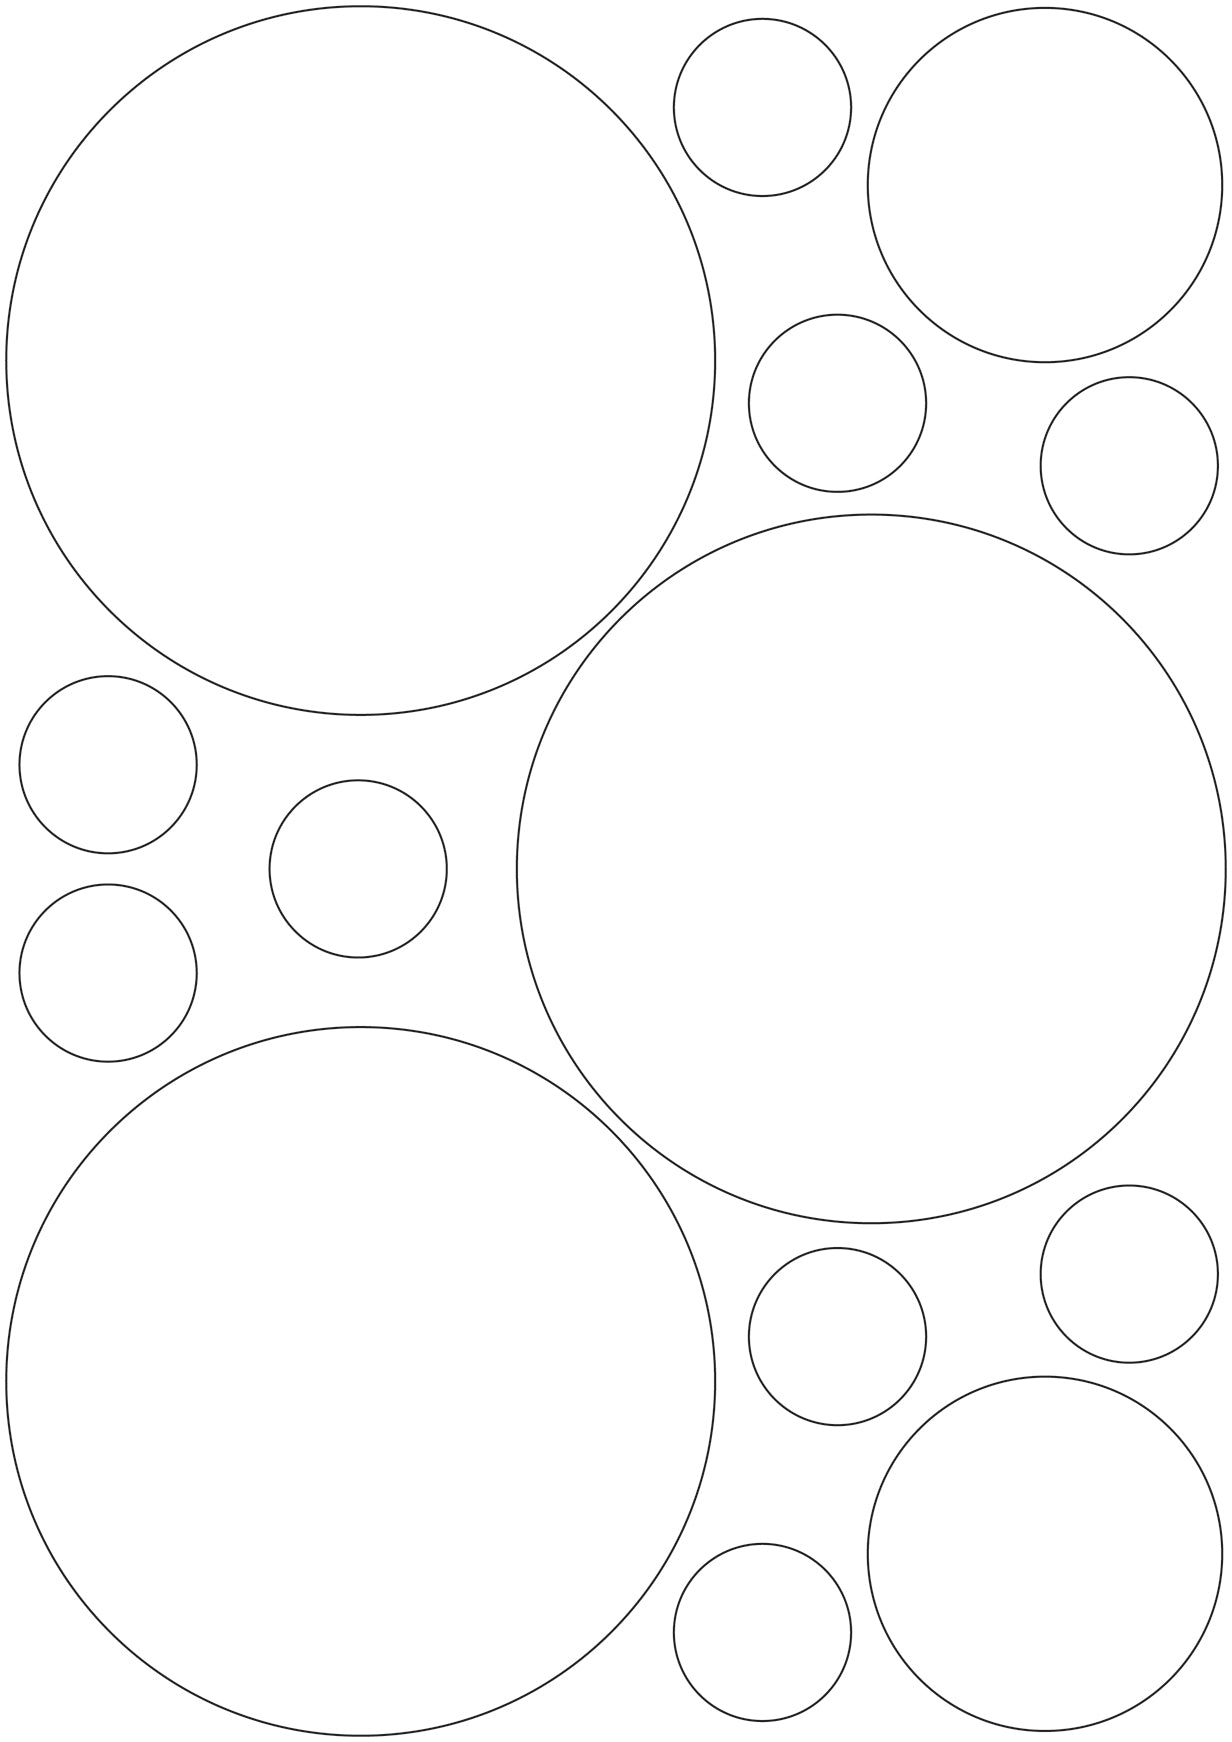 3M White/Silver Reflective Circles - A4 Sheet 120mm Circles